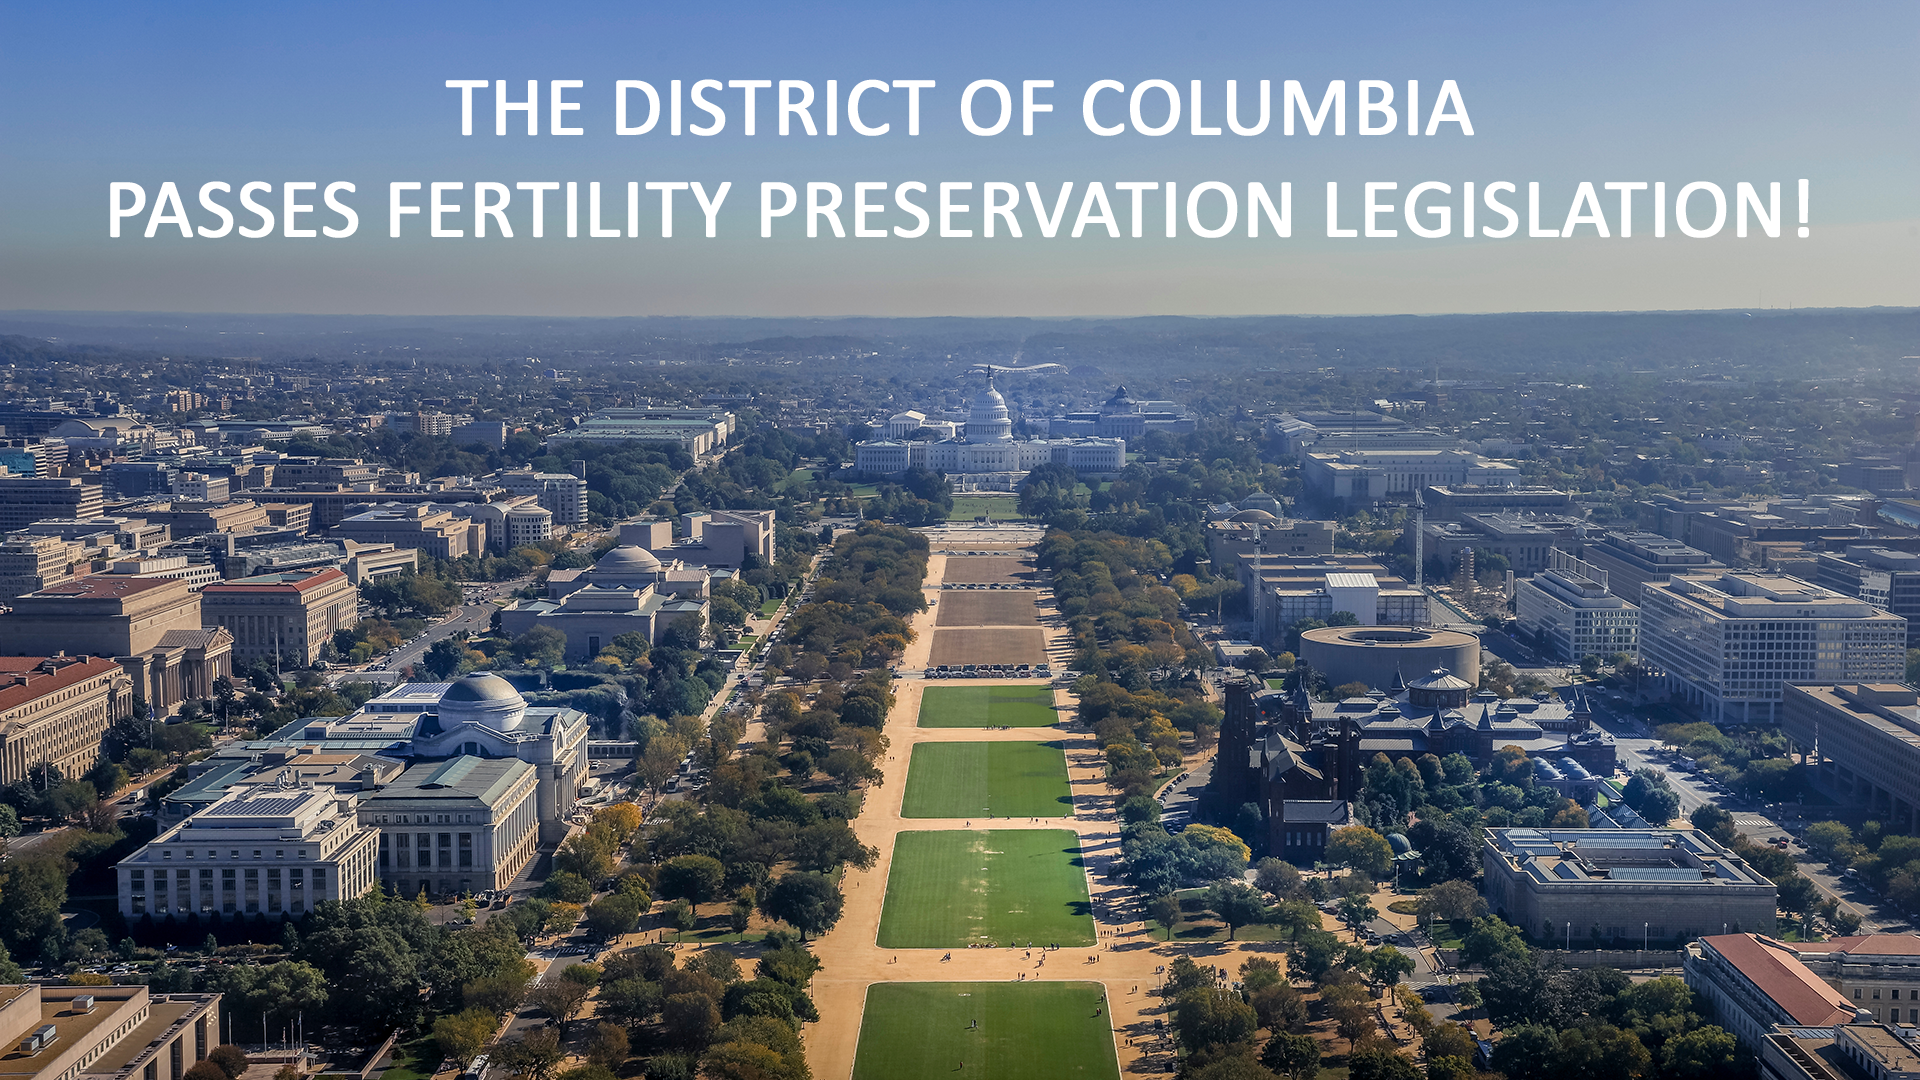 The District of Columbia Passes Fertility Preservation Legislation!